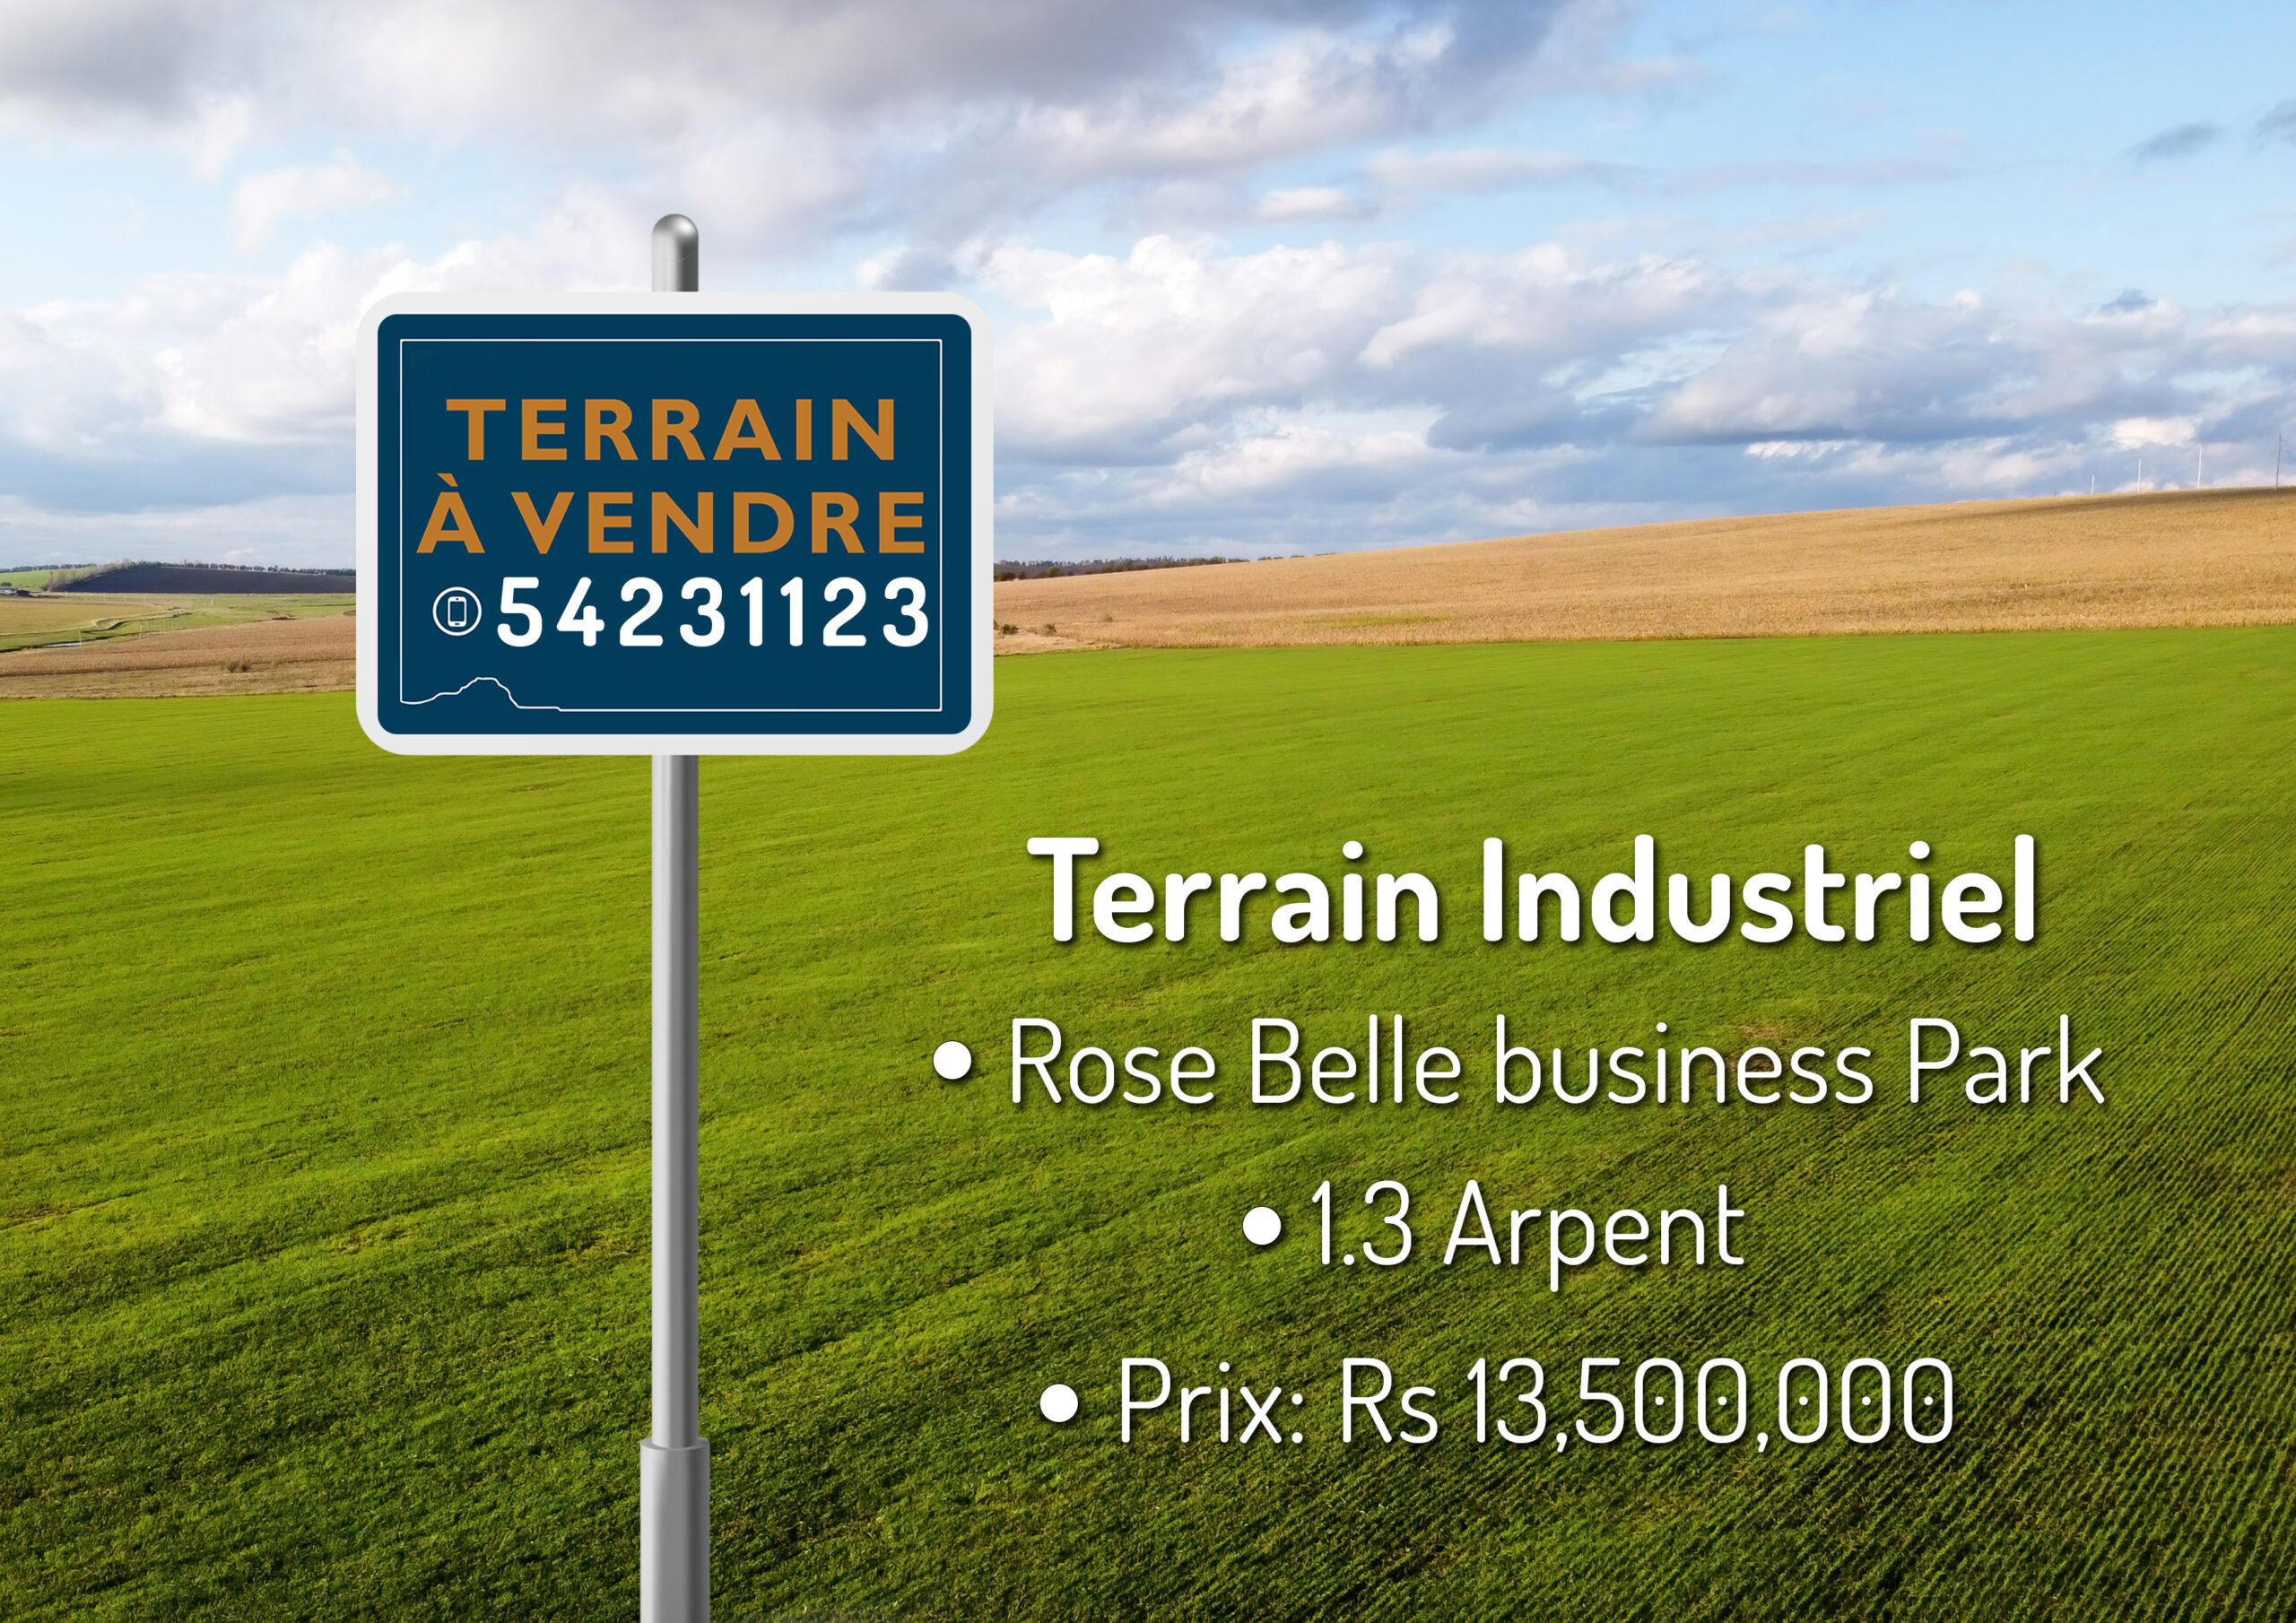 Terrain Industriel – Rose Belle business Park